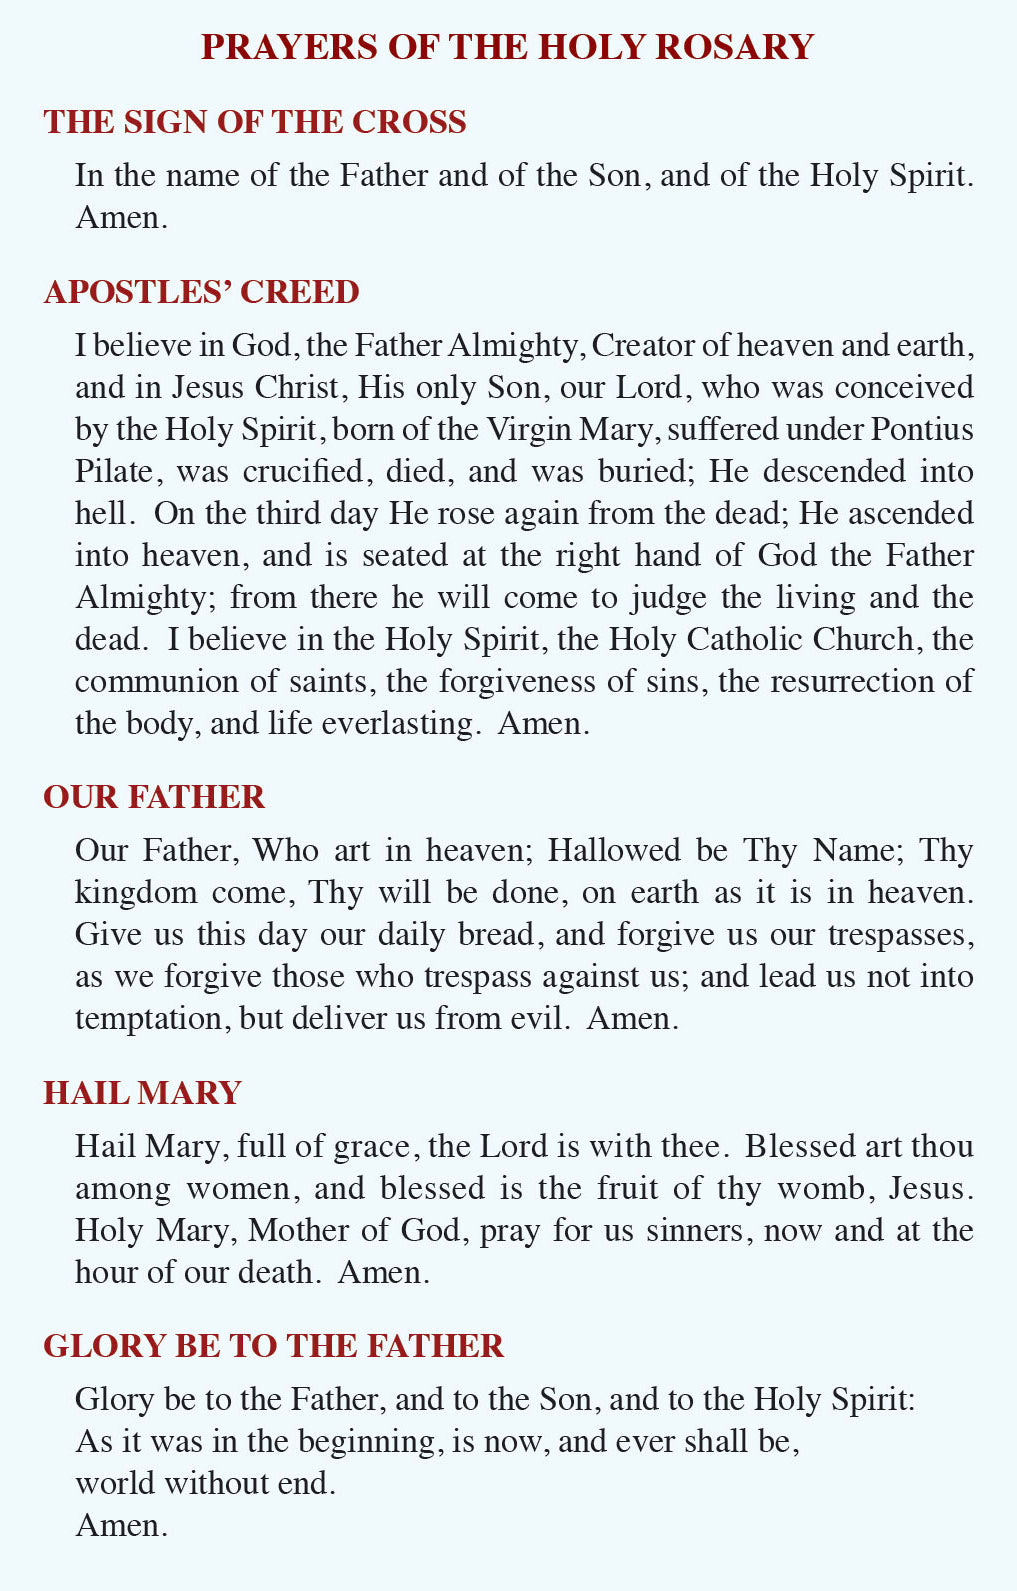 Laminated Rosary Prayer Card/Leaflet